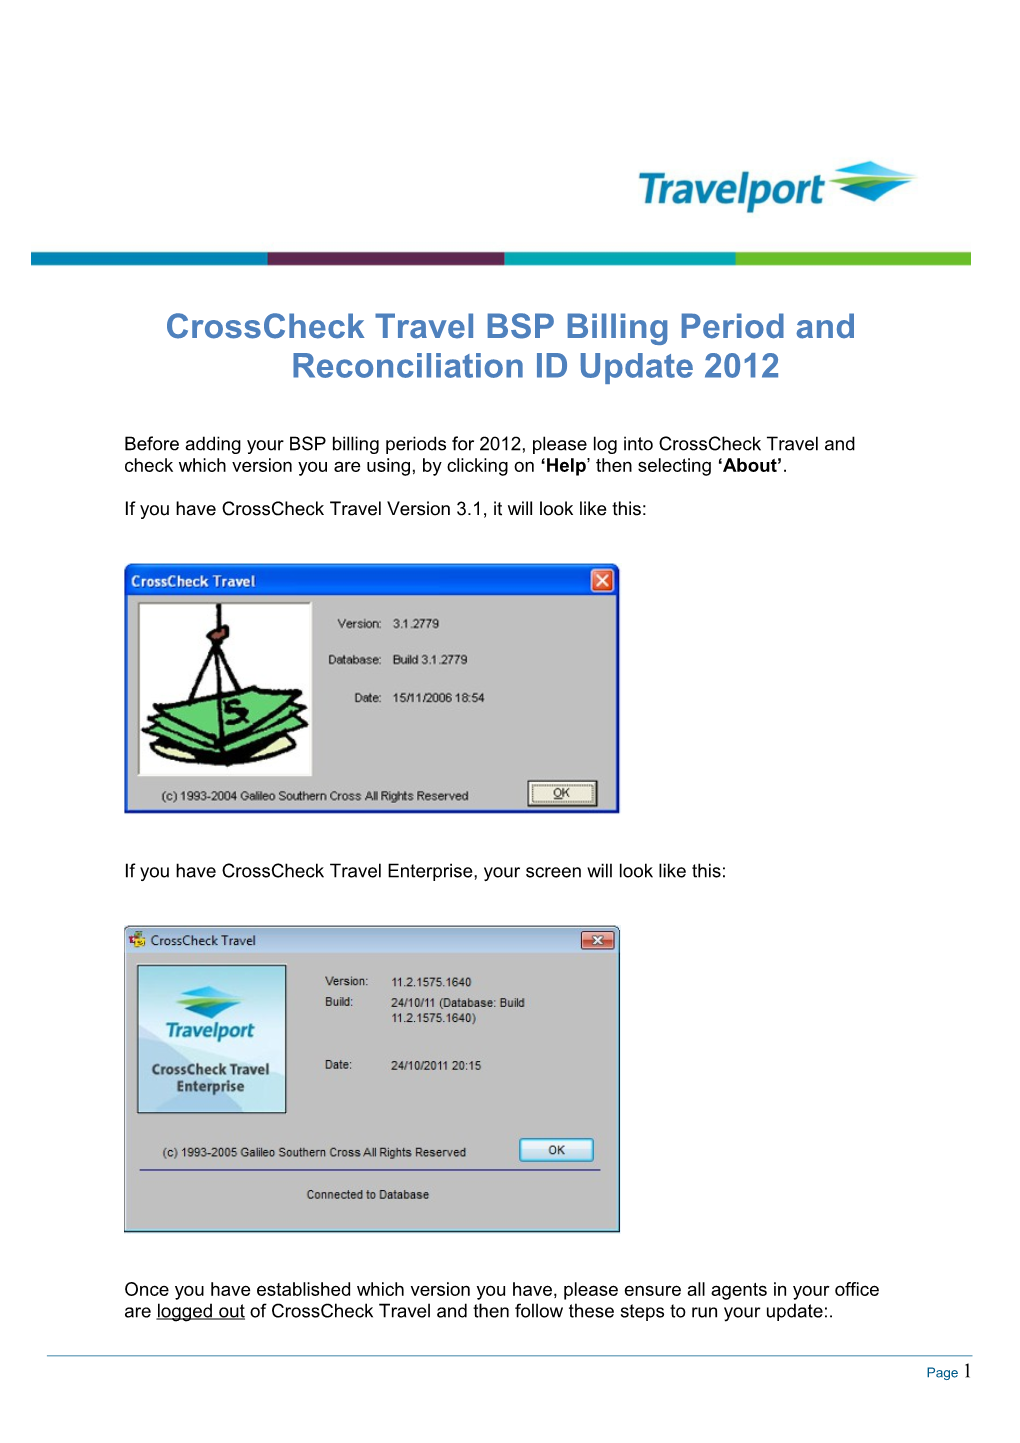 Crosscheck Travel BSP Billing Period and Reconciliation Idupdate 2012